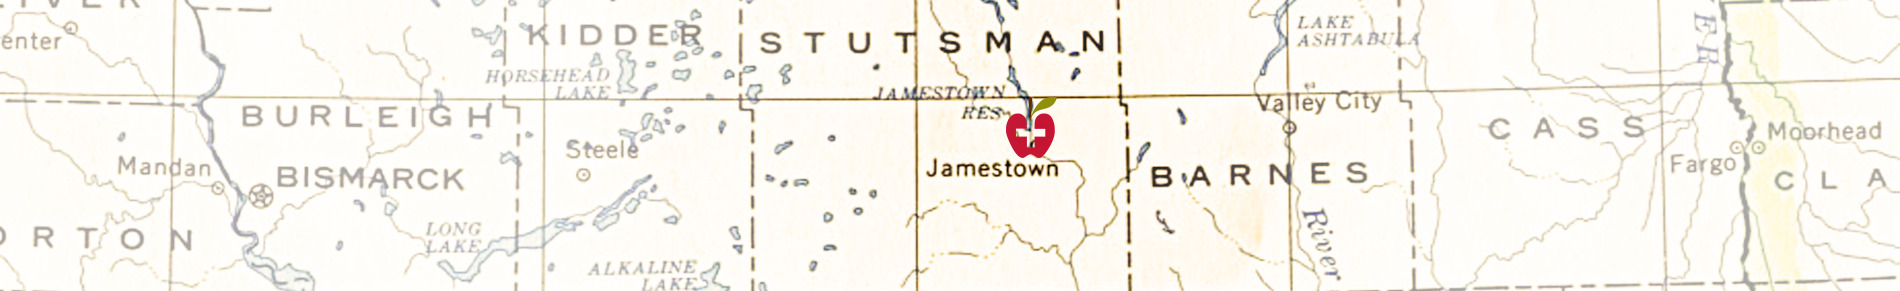 Jamestown Regional Medical Center